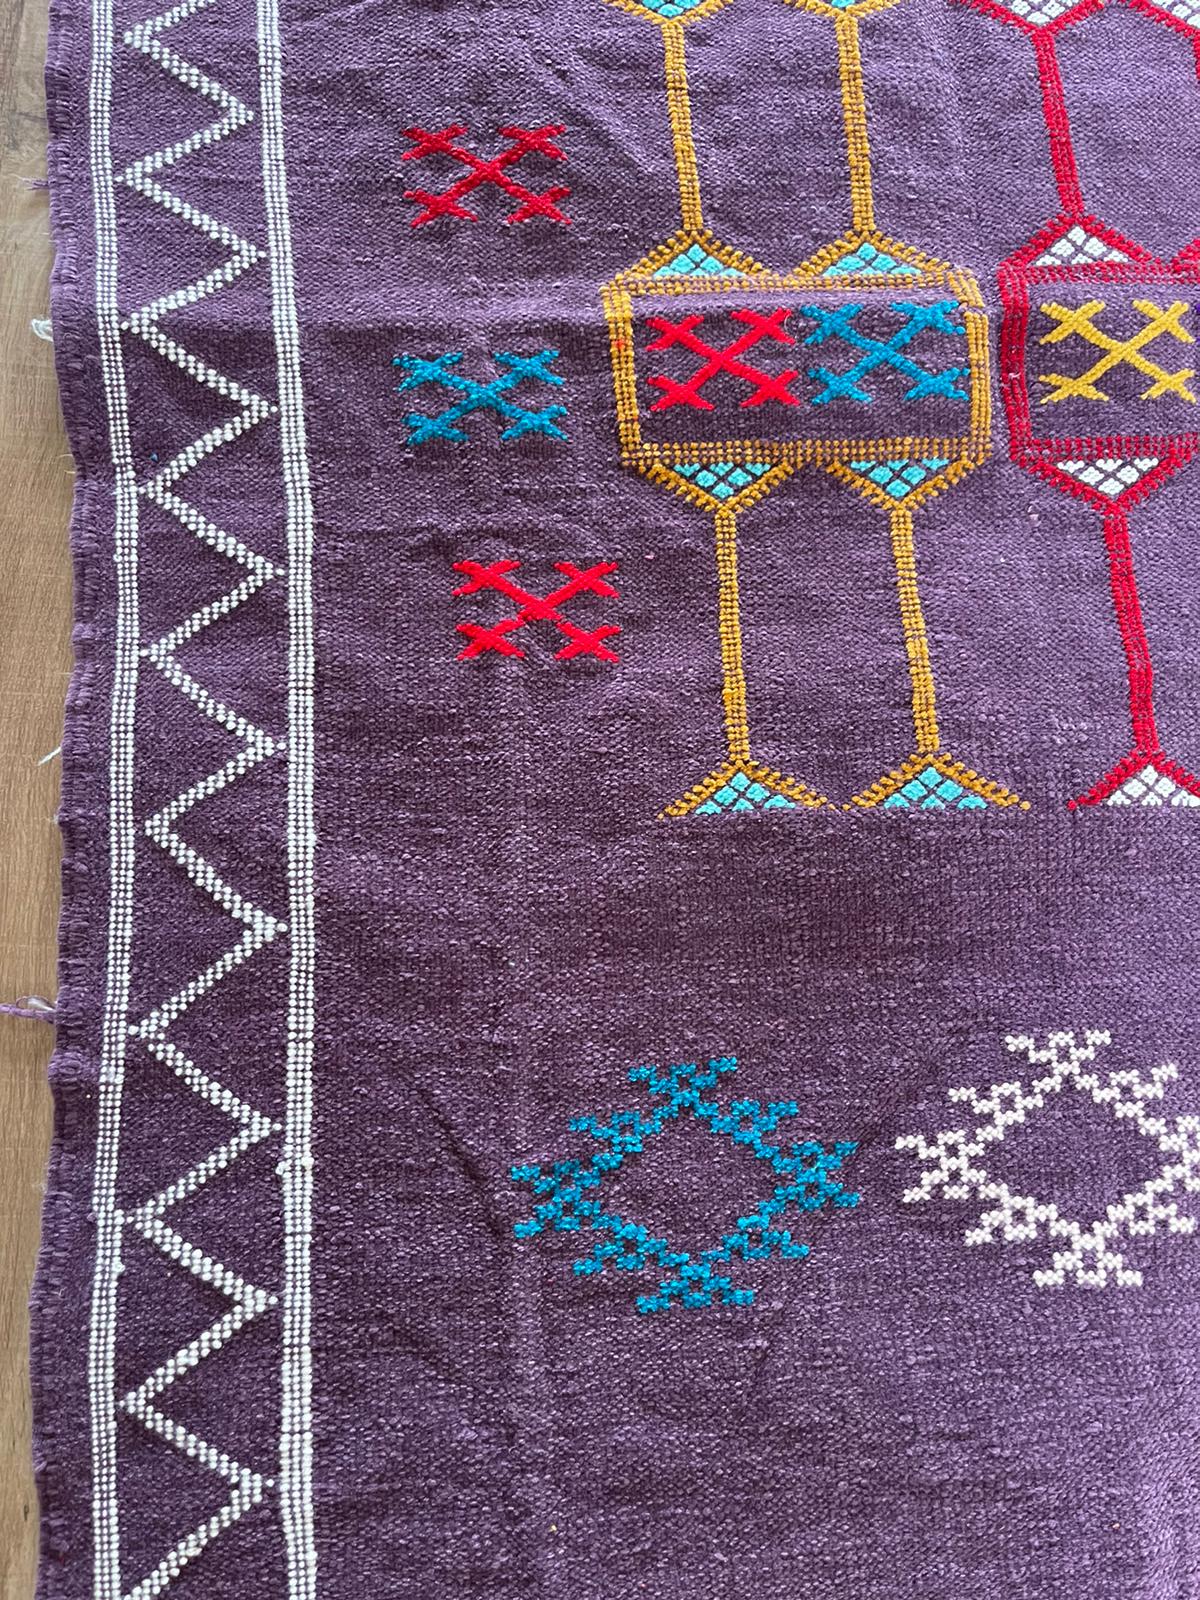 purple wool Kilim  - 150cm x 100cm